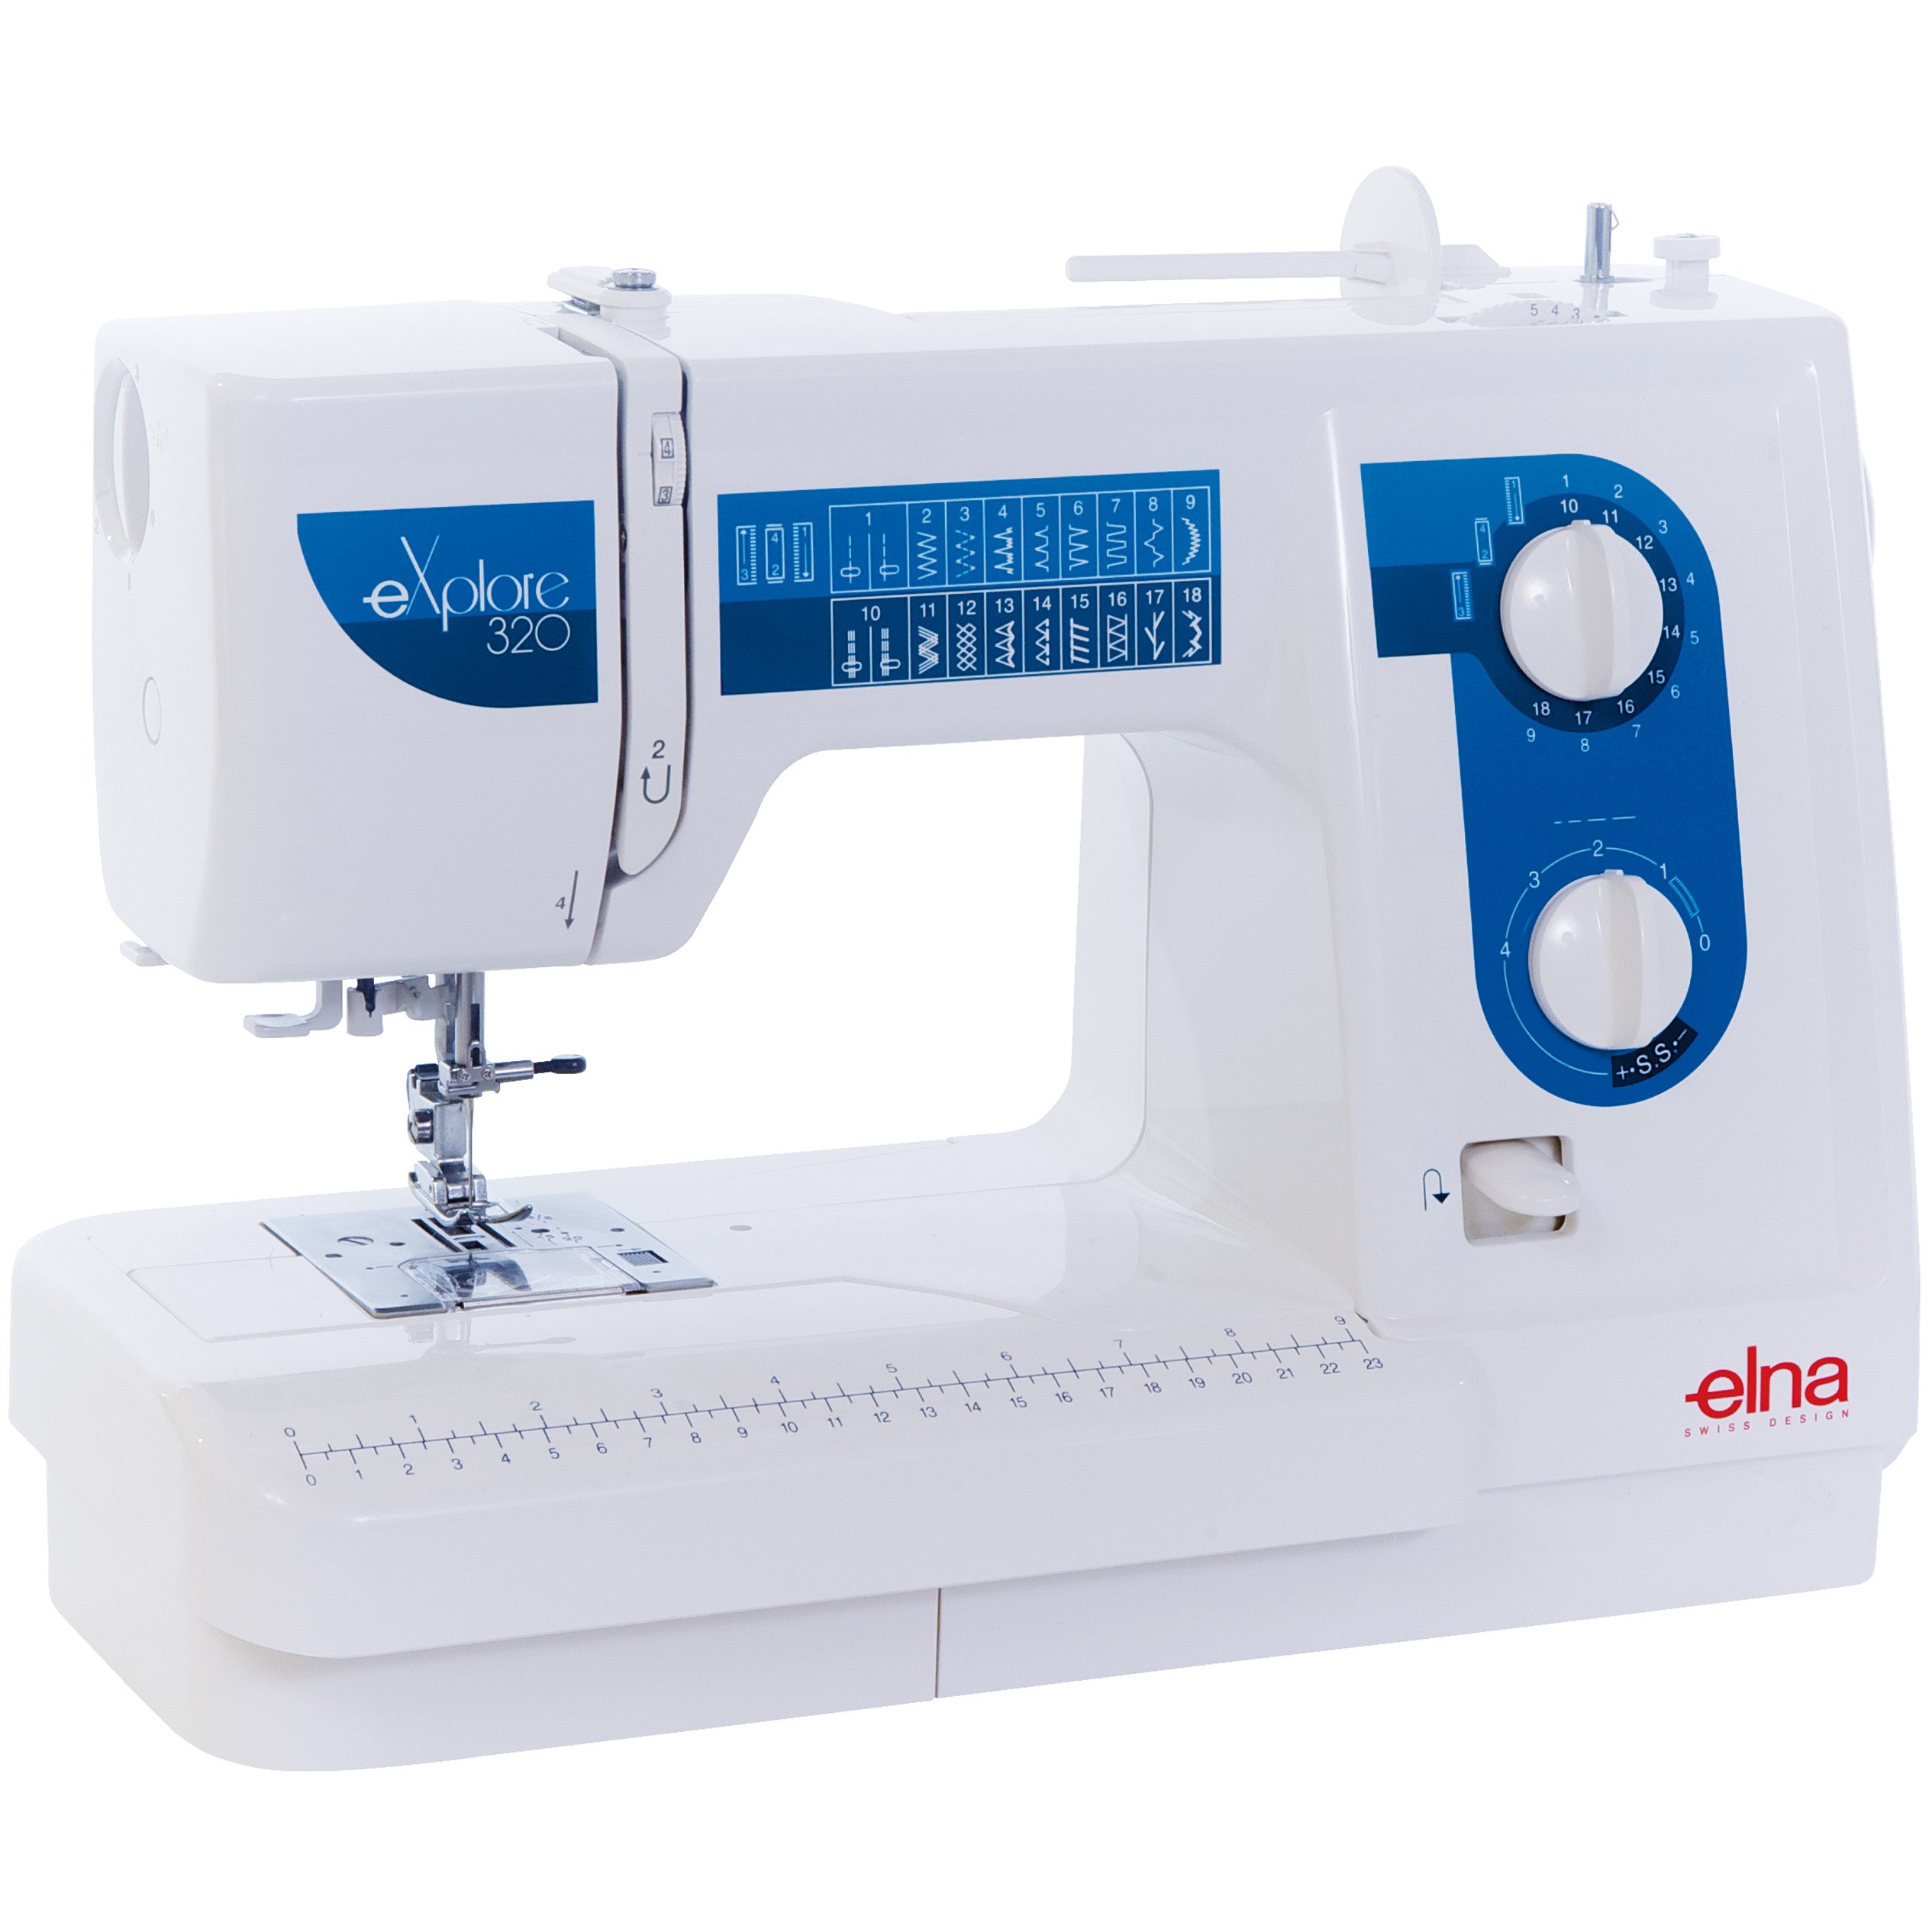 Elna eXplore 320 Mechanical Sewing Machine image # 100539